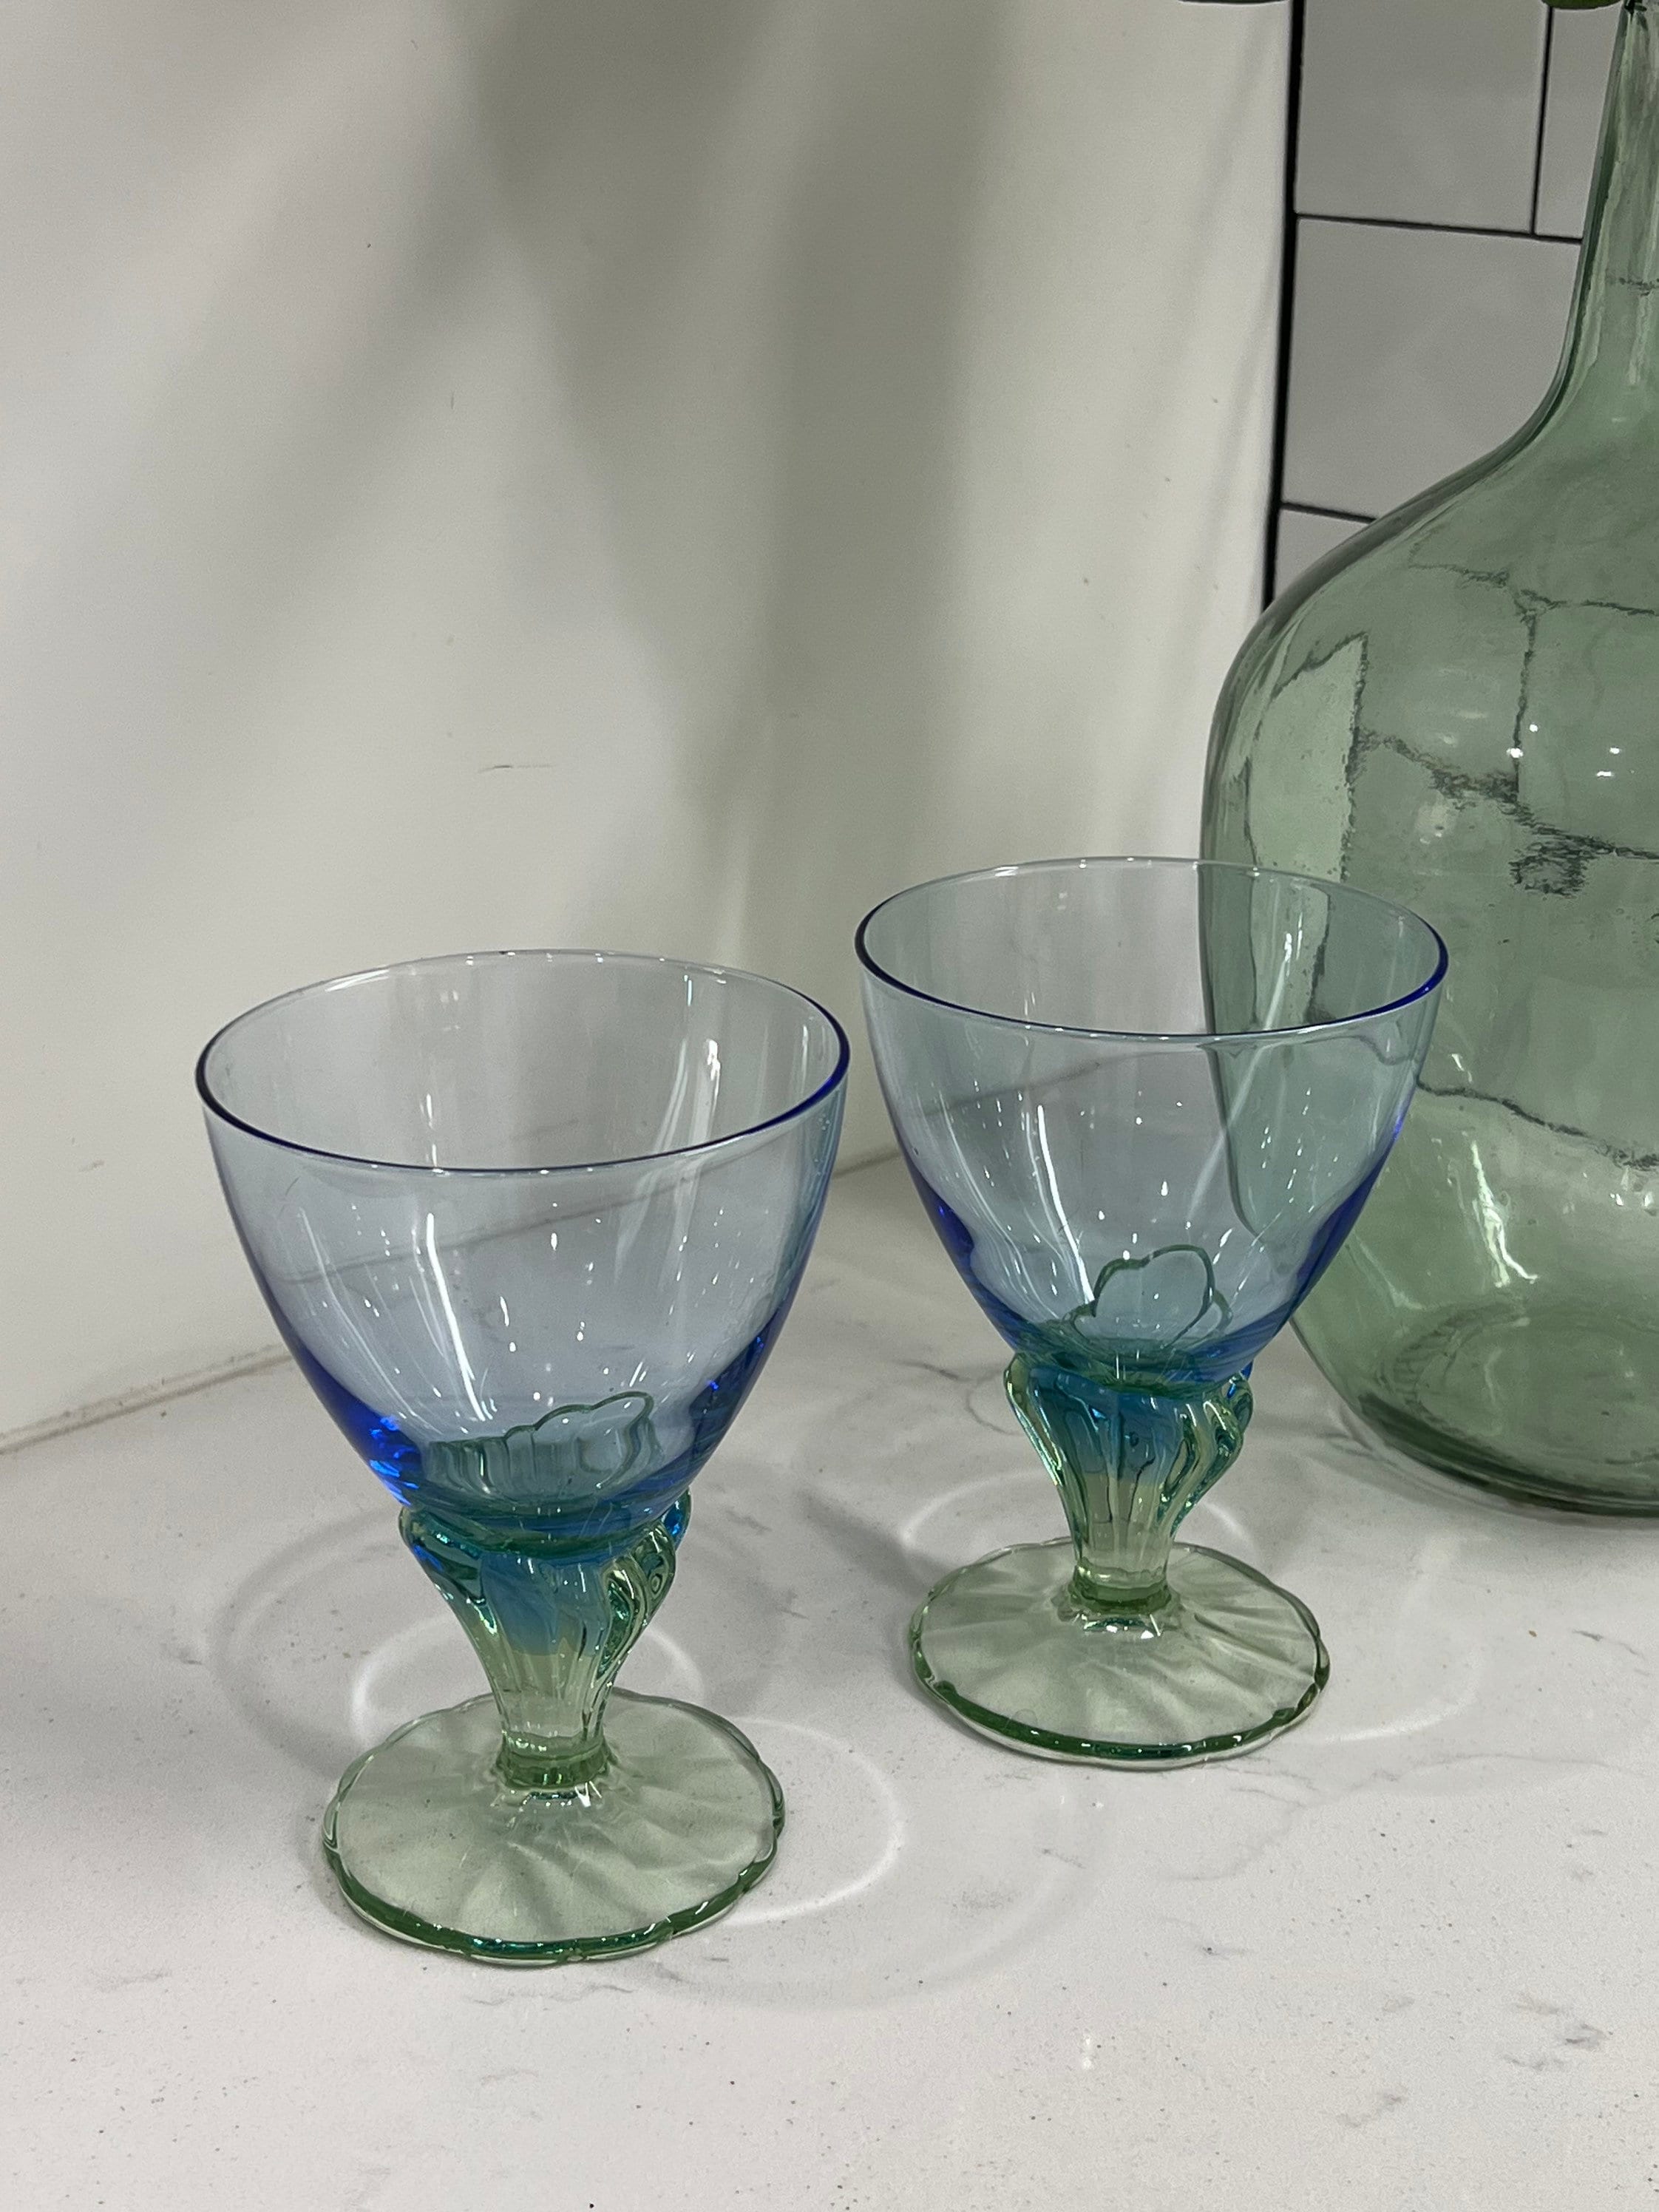 Bormioli Rocco Bahia Iced Tea Glasses | Stunning Blue Green Wine Goblets |  Italian Glassware Set of 4 or 6 | Mermaid Glass Stemware Italy